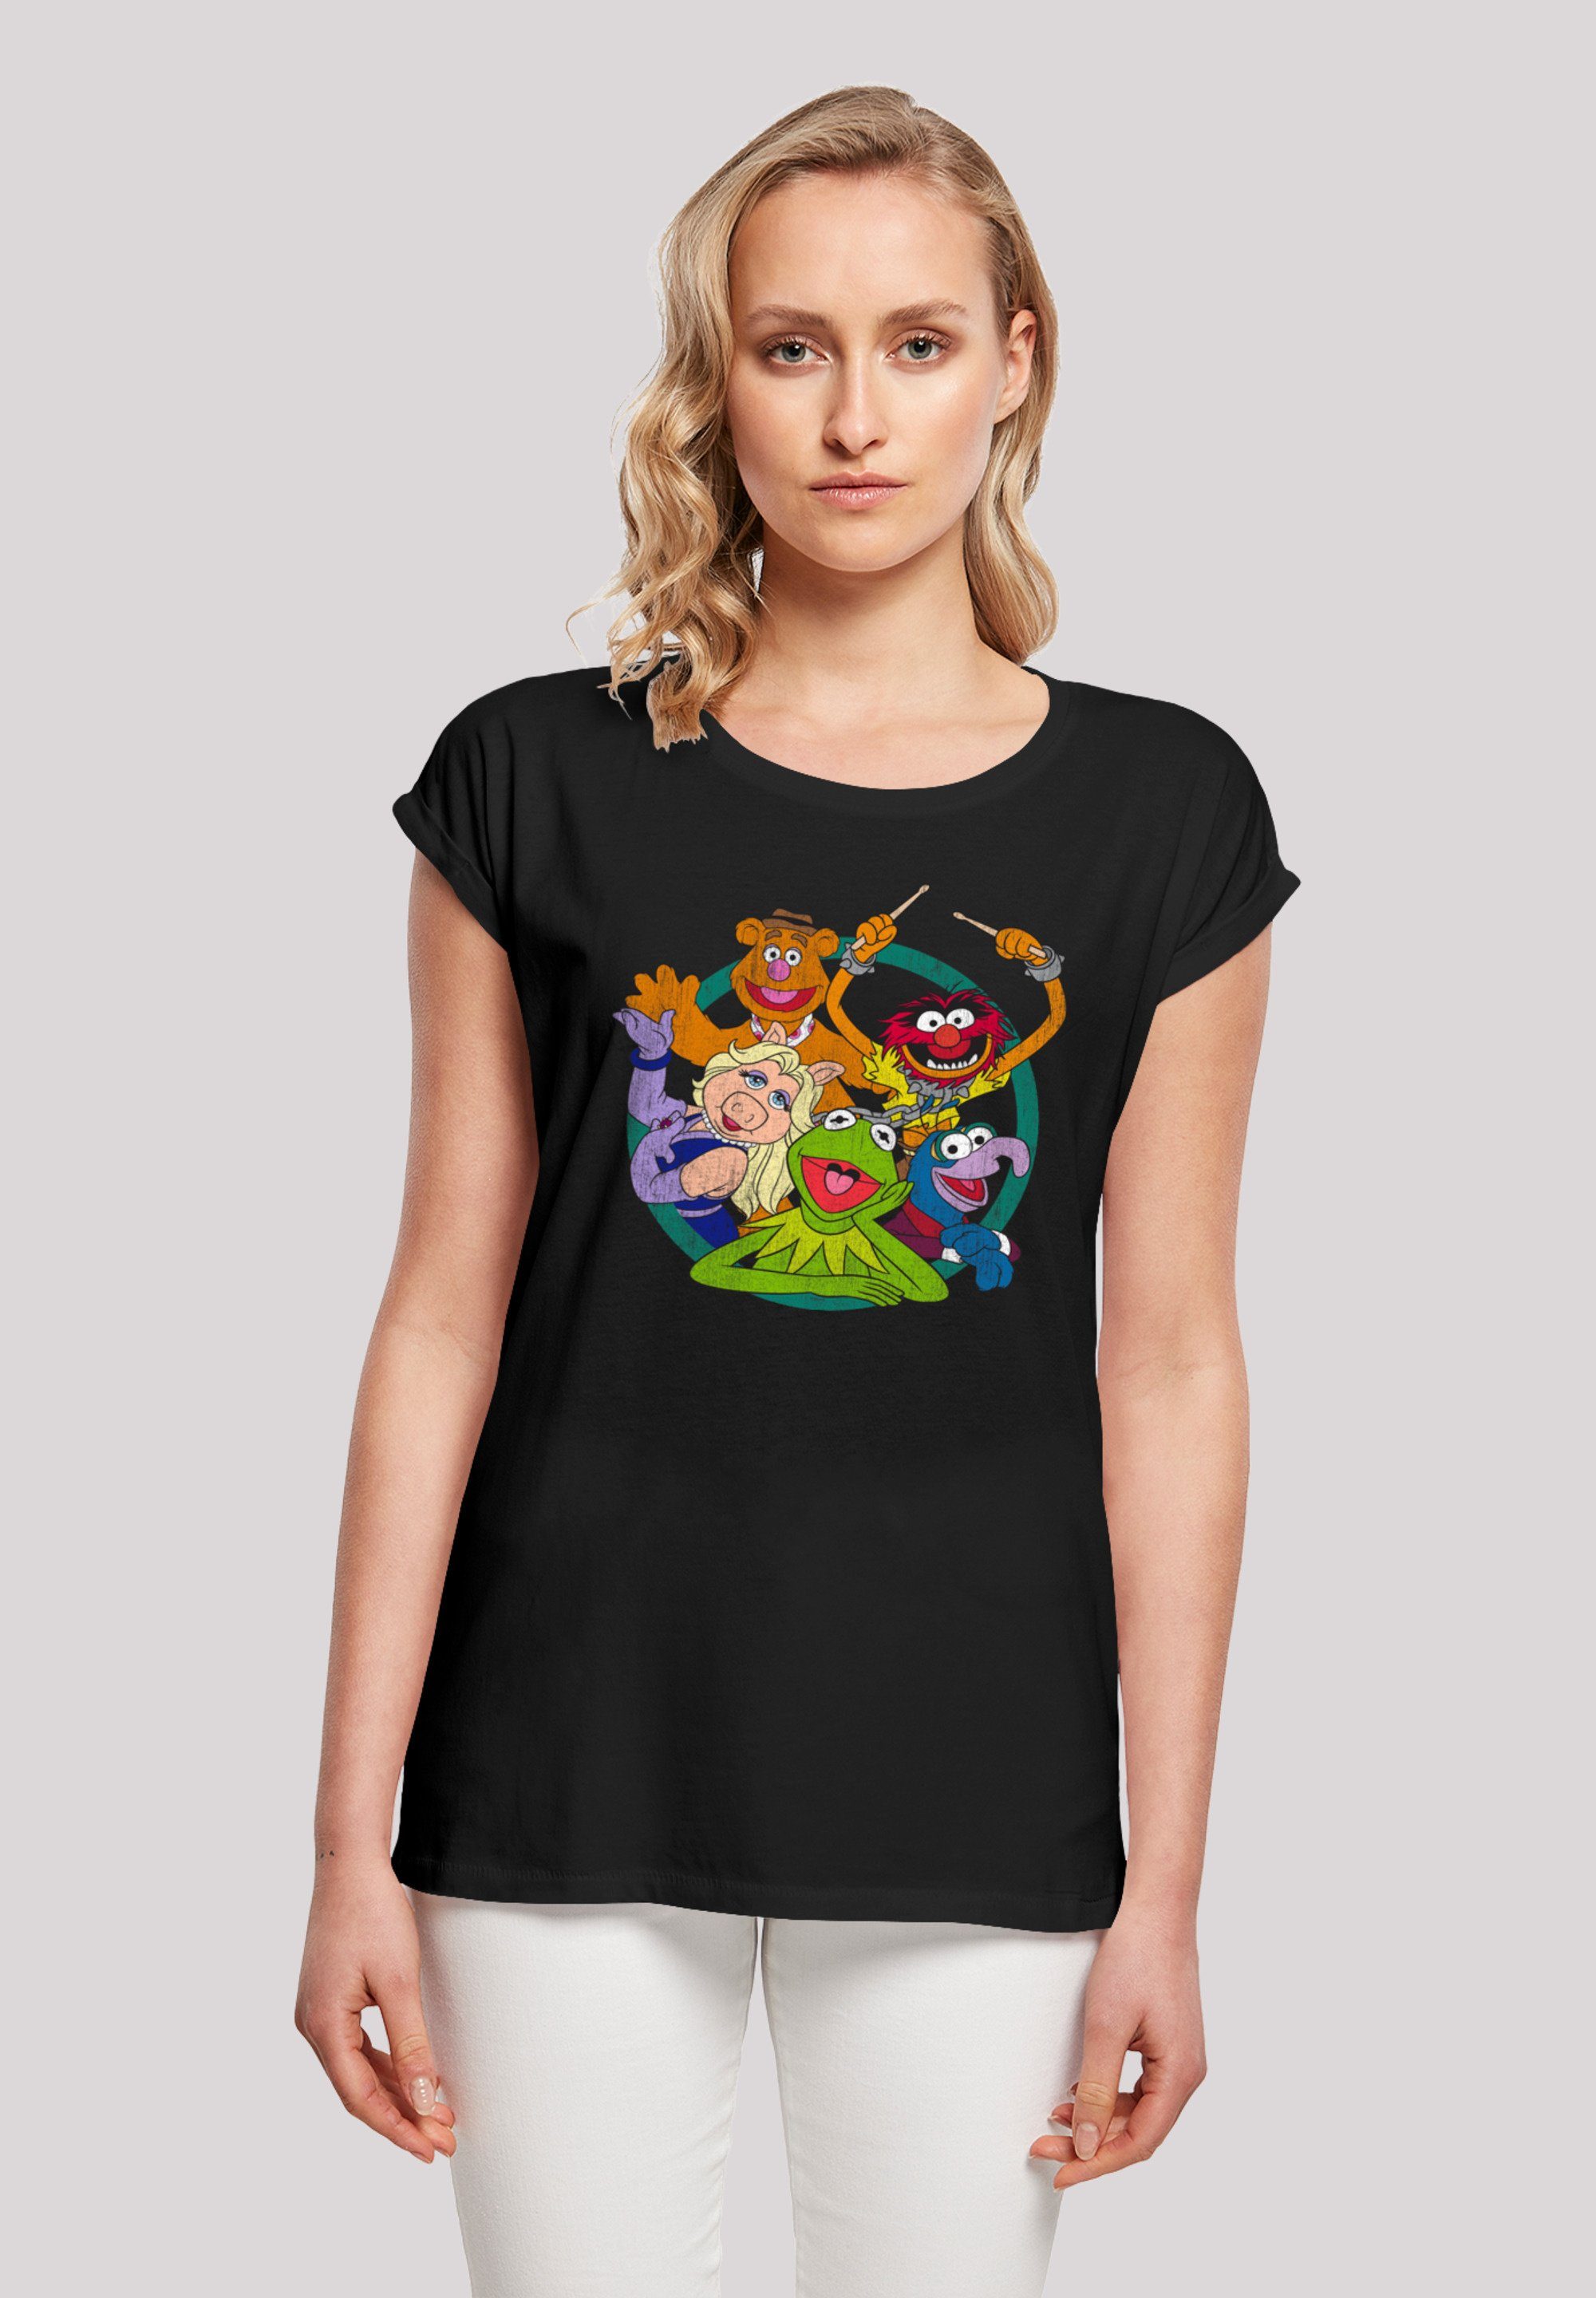 Die Offiziell Circle lizenziertes T-Shirt Group T-Shirt Disney Print, Disney Muppets F4NT4STIC